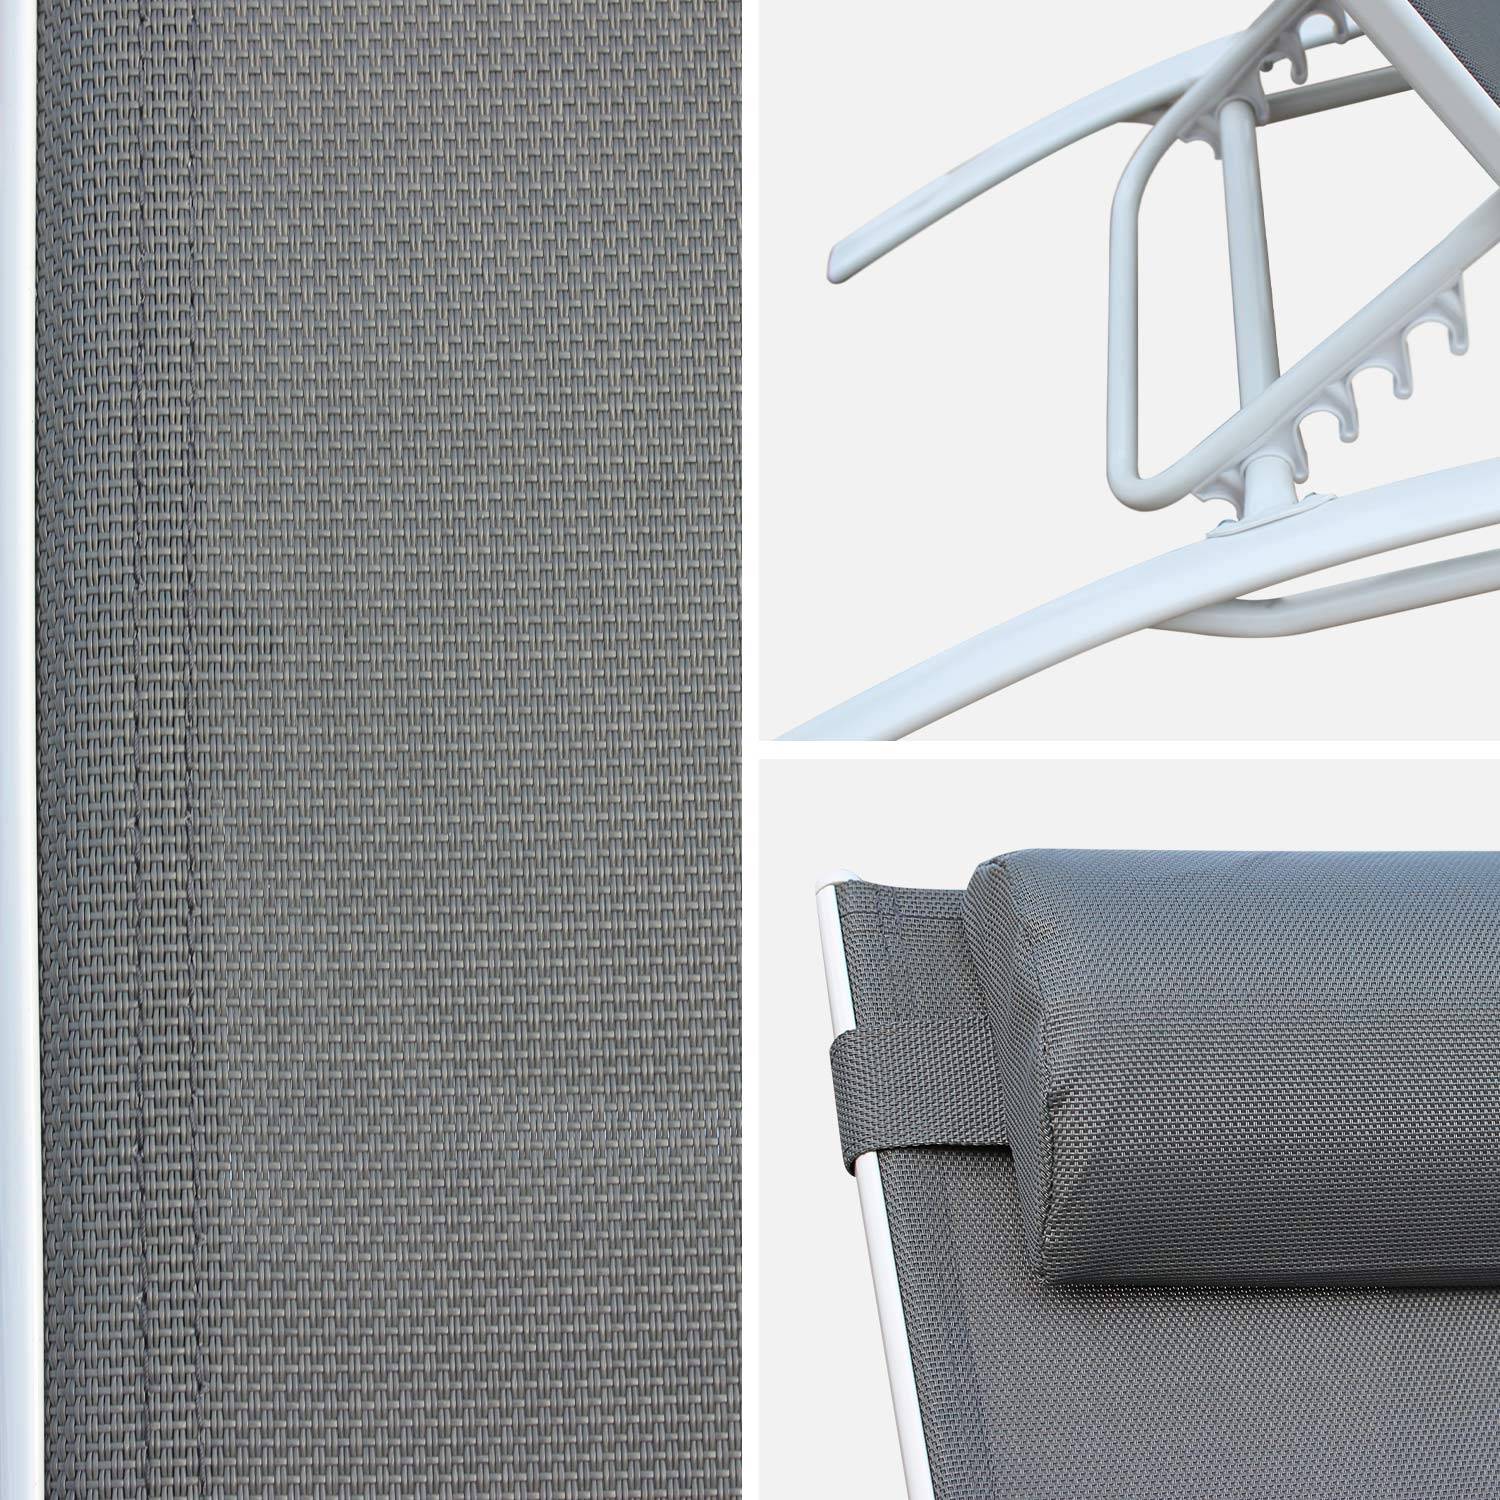 Tumbonas de aluminio blanco y textileno gris | Louisa x2 Photo6